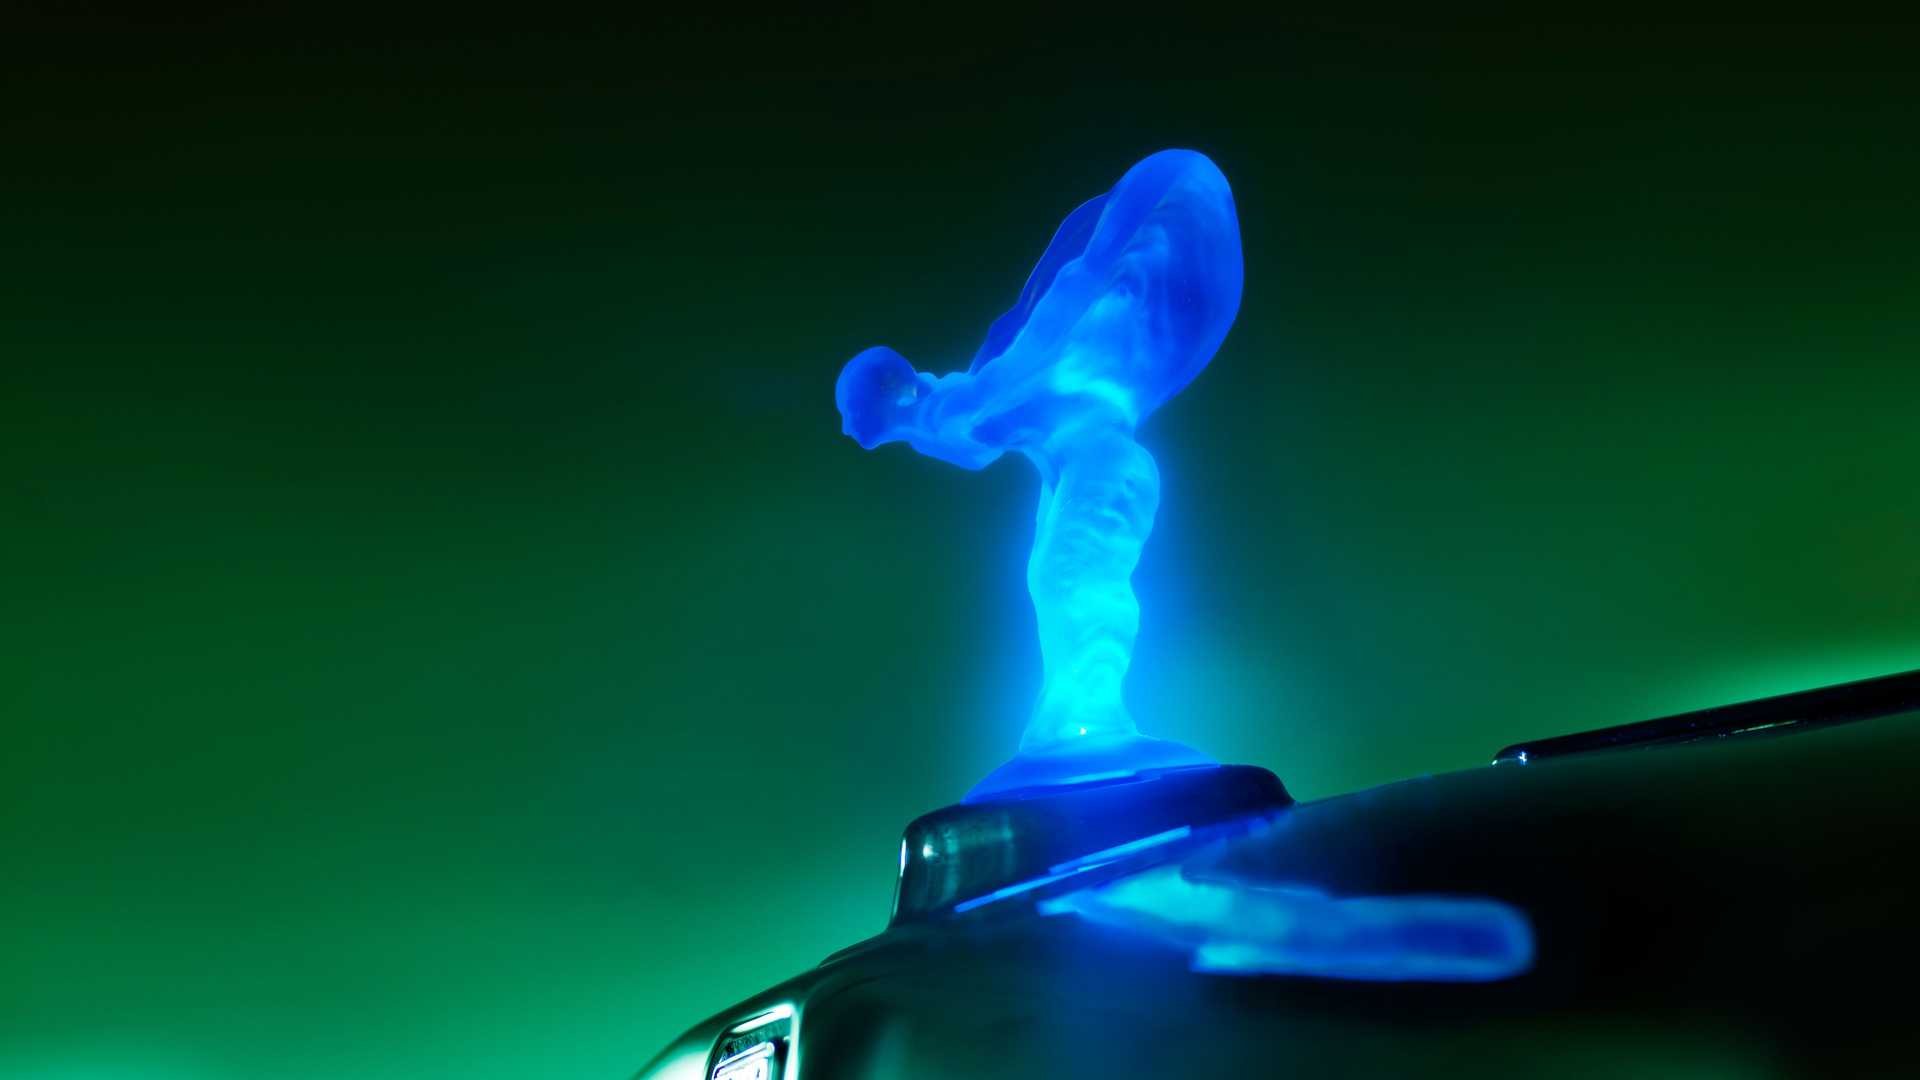  UE a interzis logo-ul Spirit of Ecstasy iluminat pentru Rolls-Royce